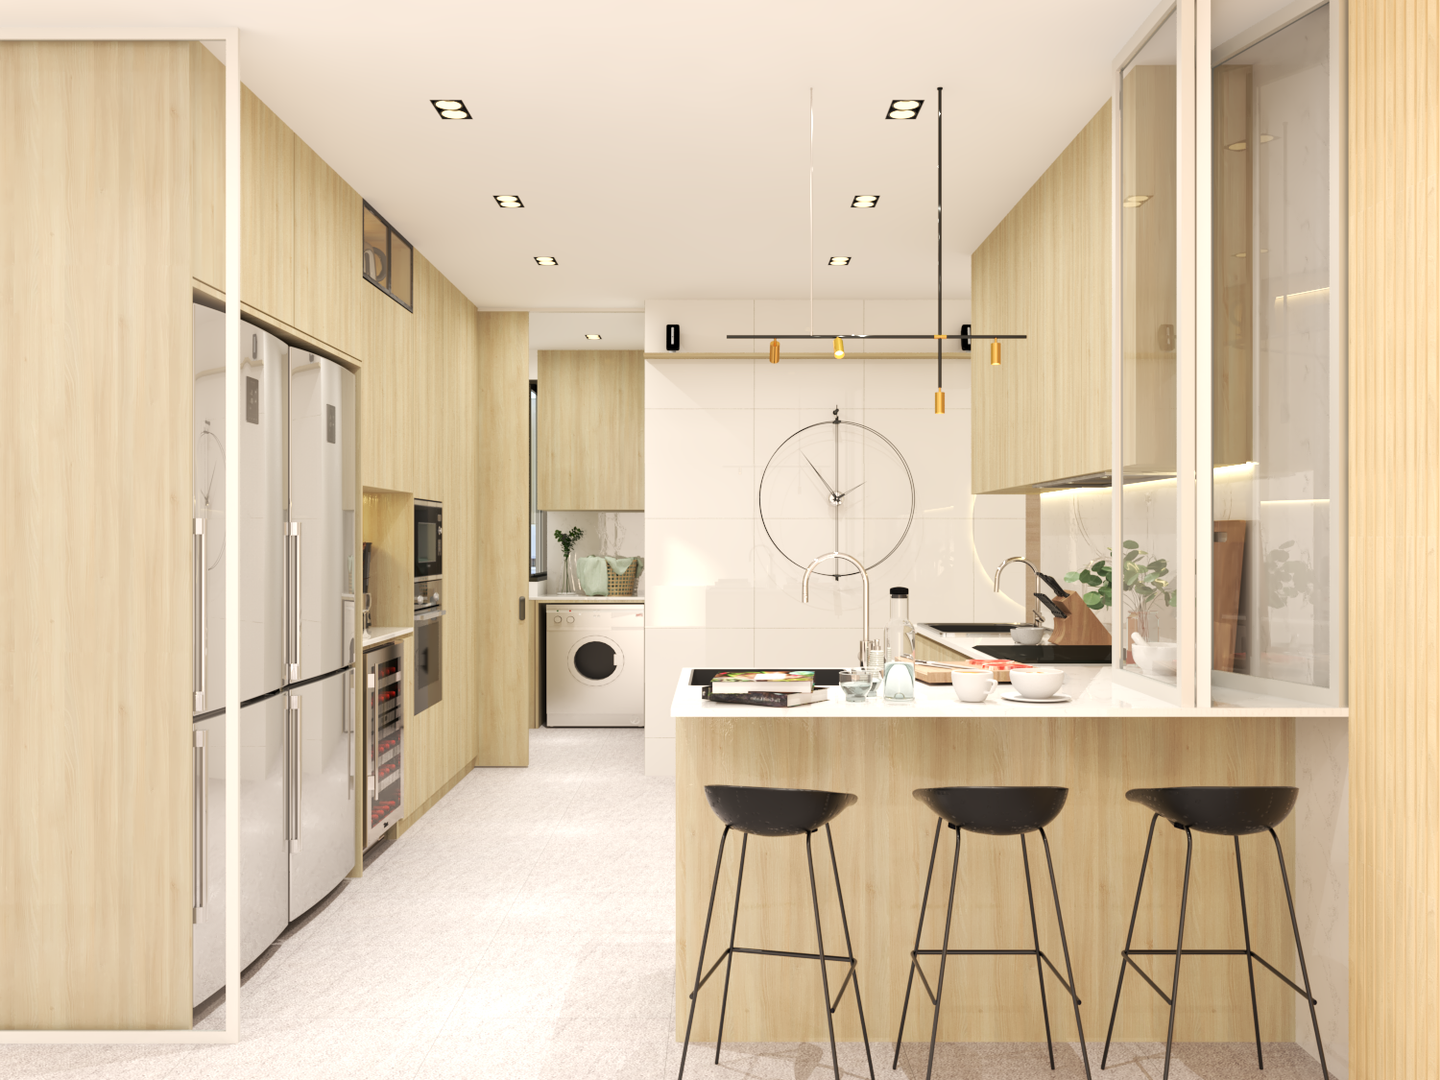 Light Wooden Texture Kitchen Design Idea with Golden Hanging Lights - Livspace